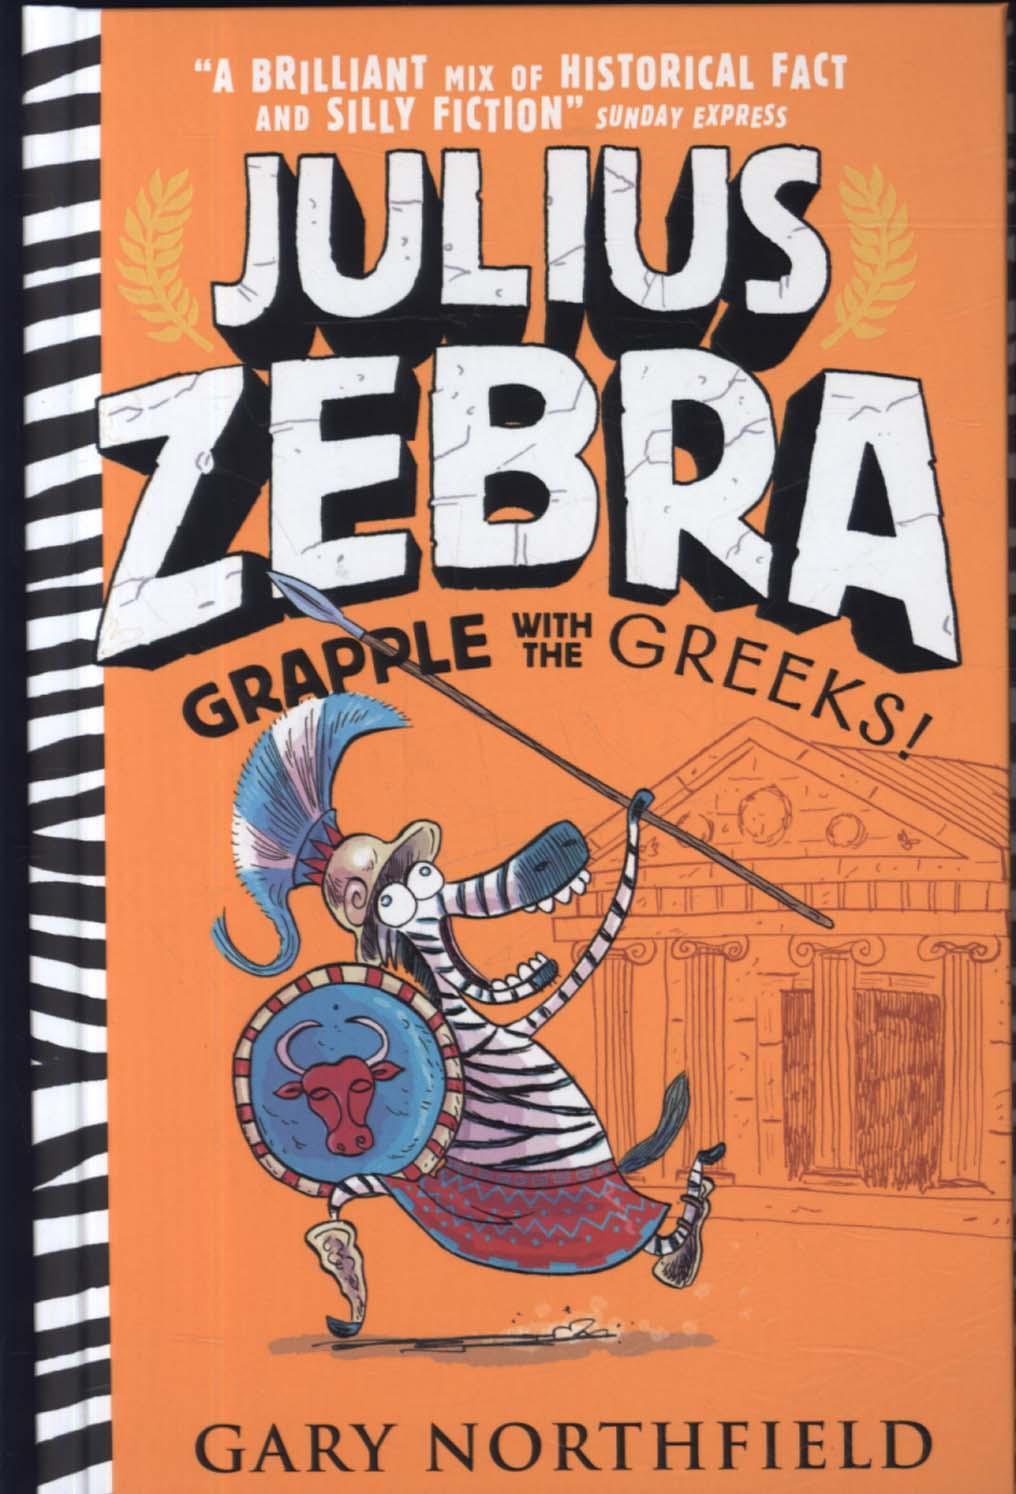 Julius Zebra: Grapple with the Greeks!